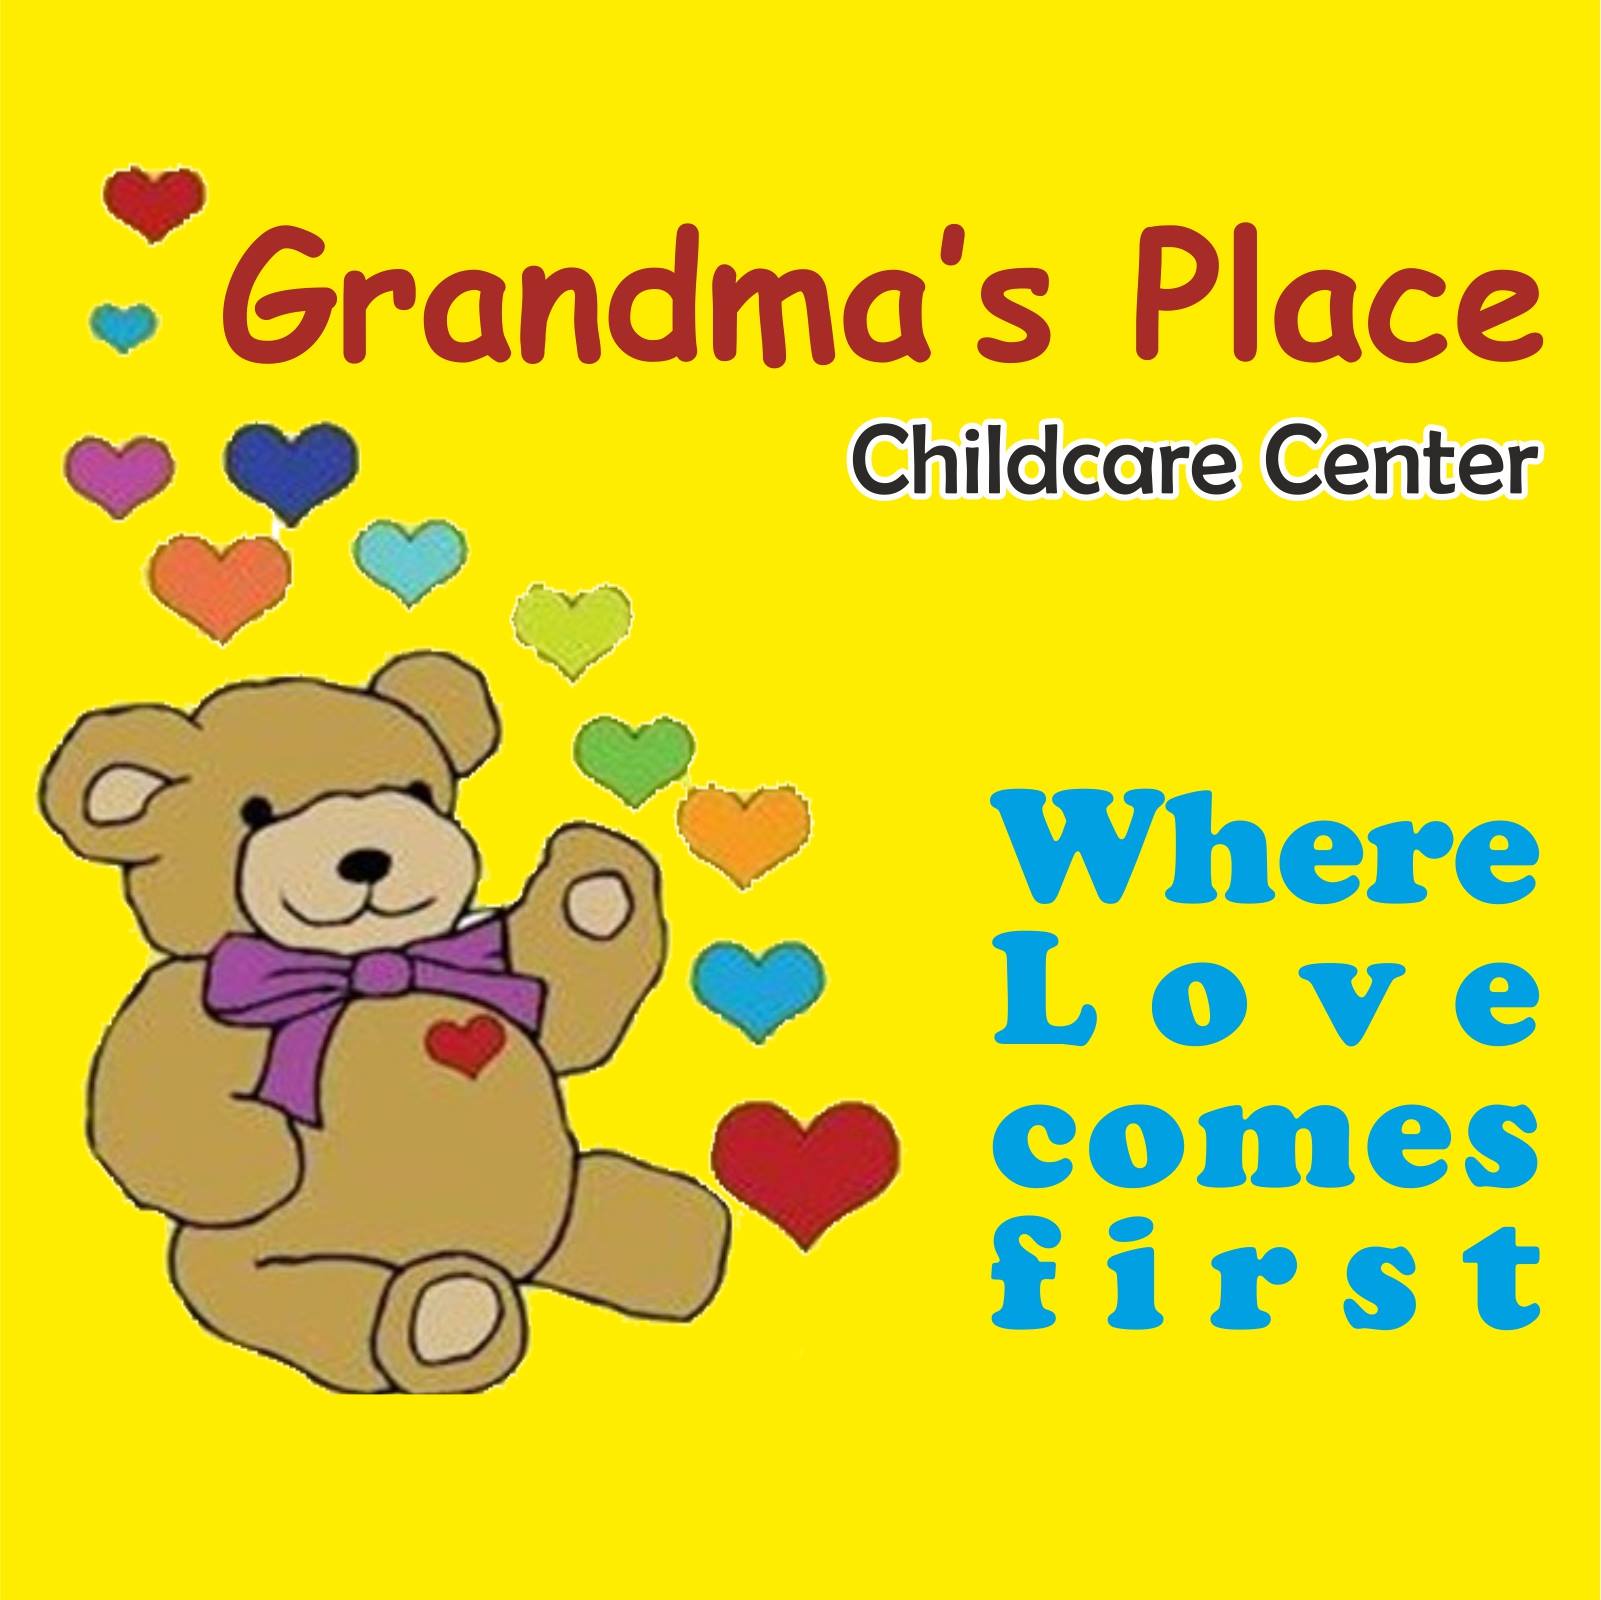 Grandma's Place Childcare